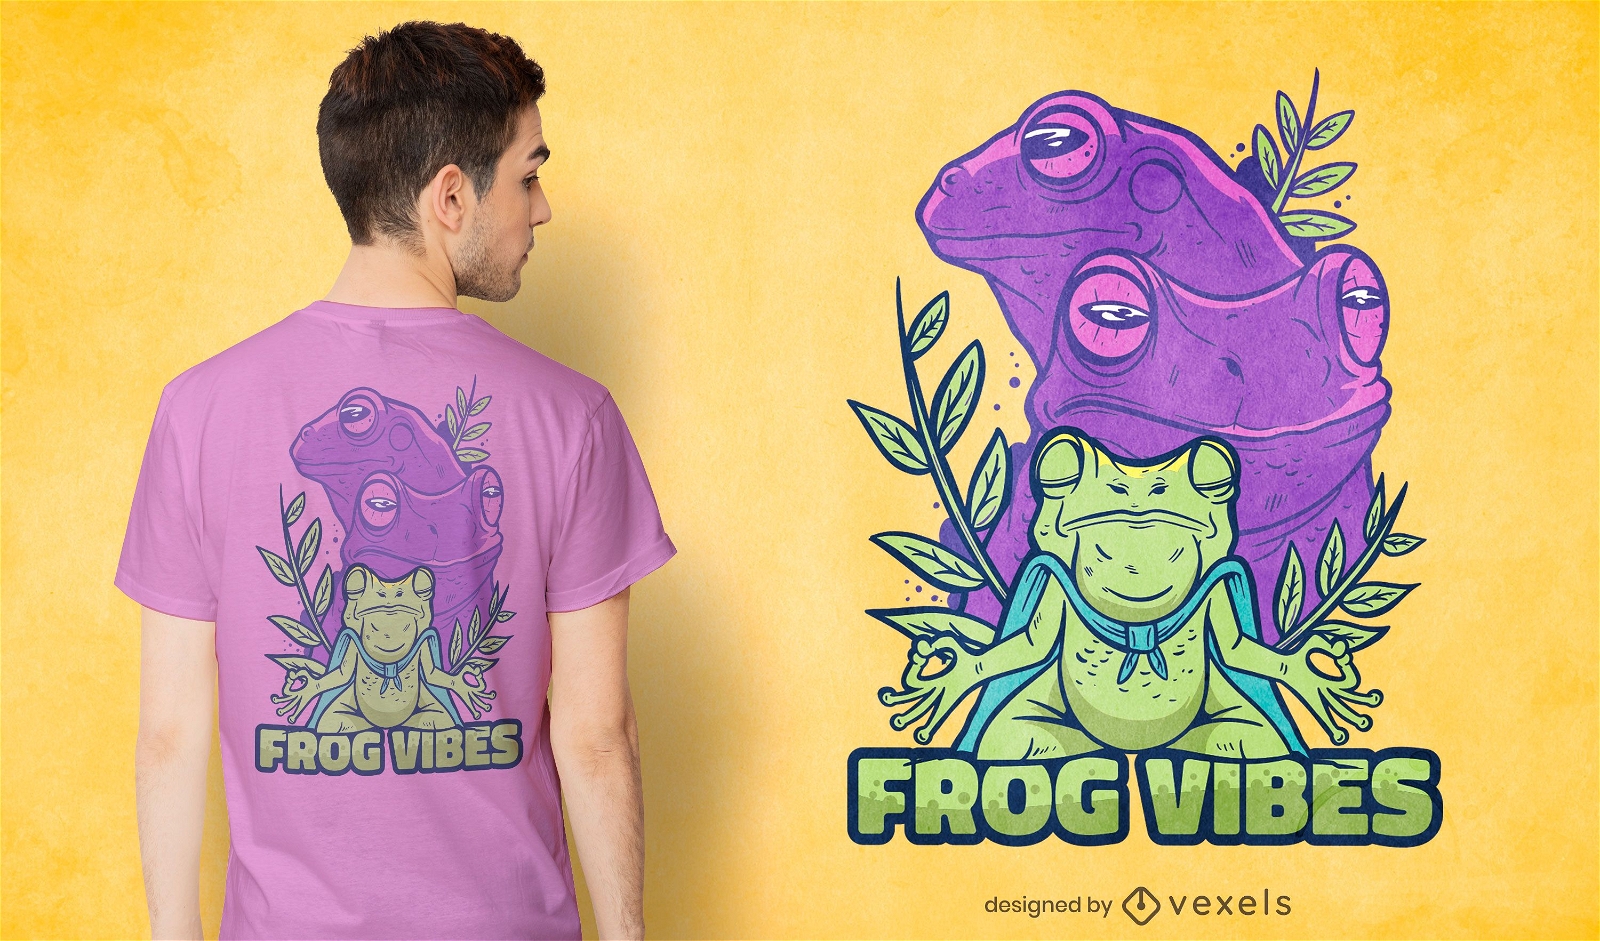 Frog vibes t-shirt design